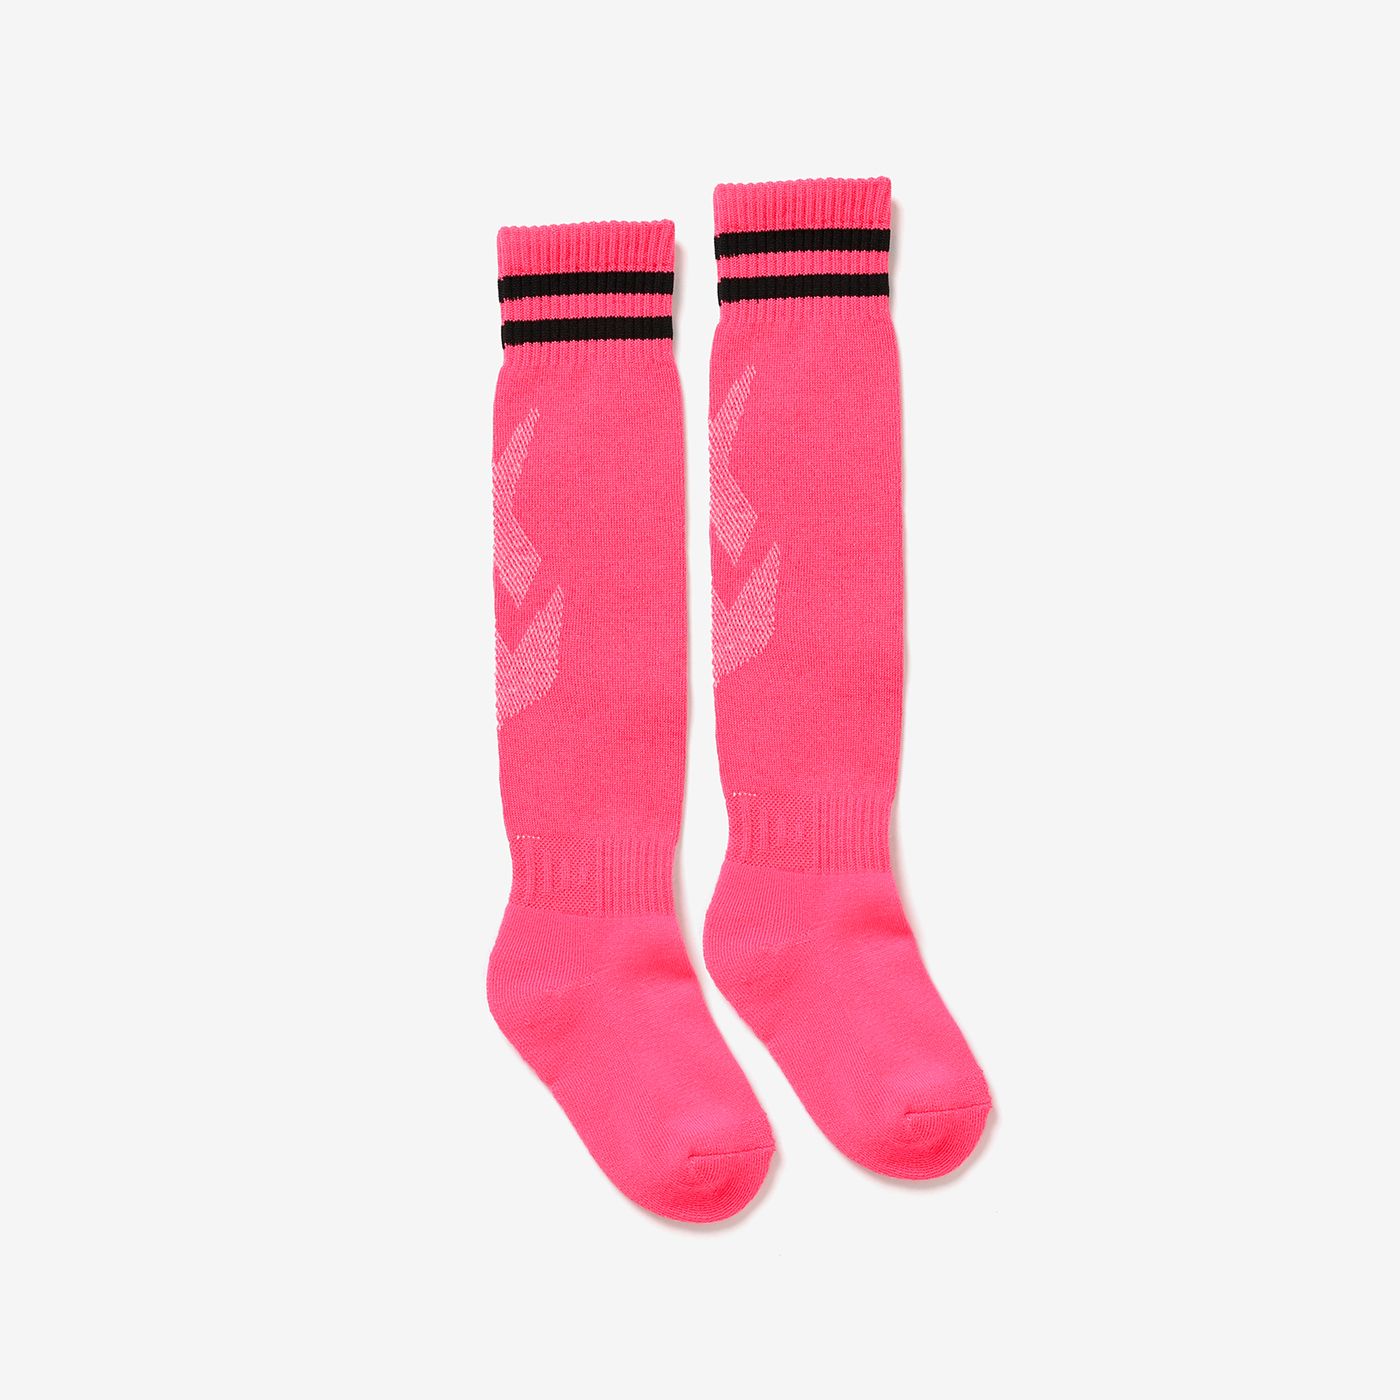 Pink And Black Soccer Socks